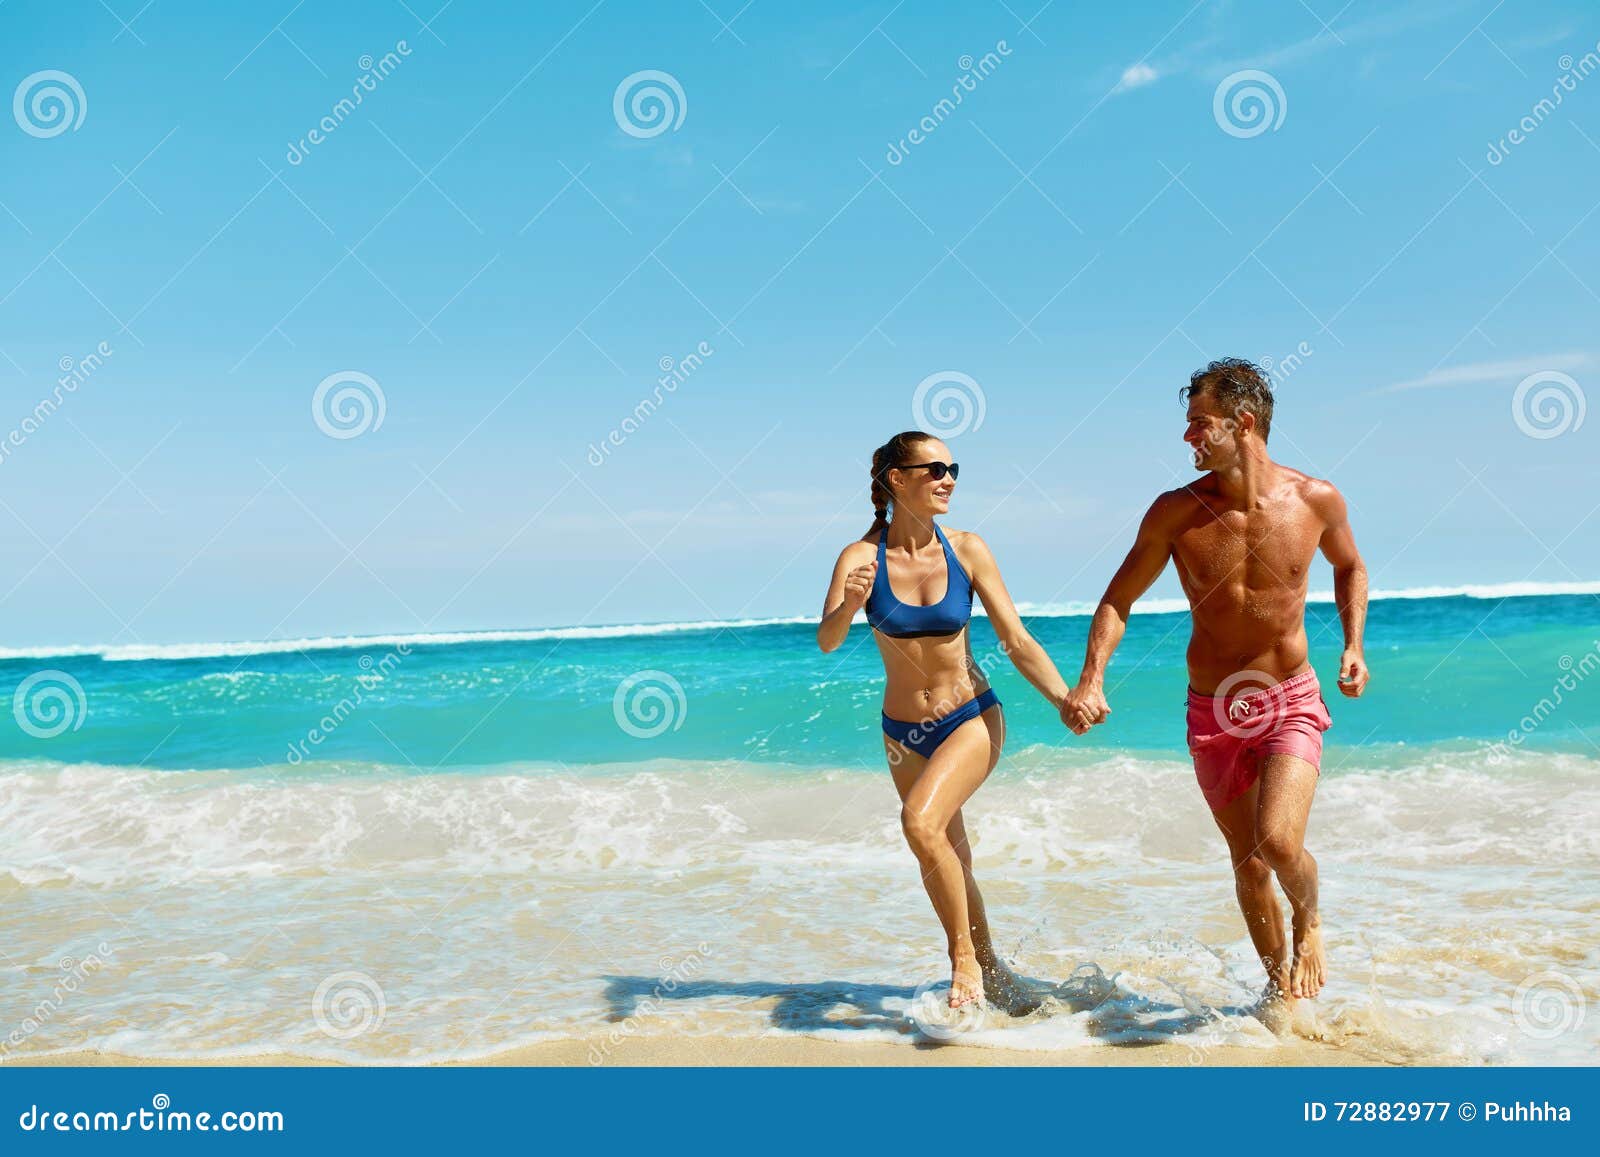 Couple Fun On Beach Romantic People In Love Running At Sea Stock Image